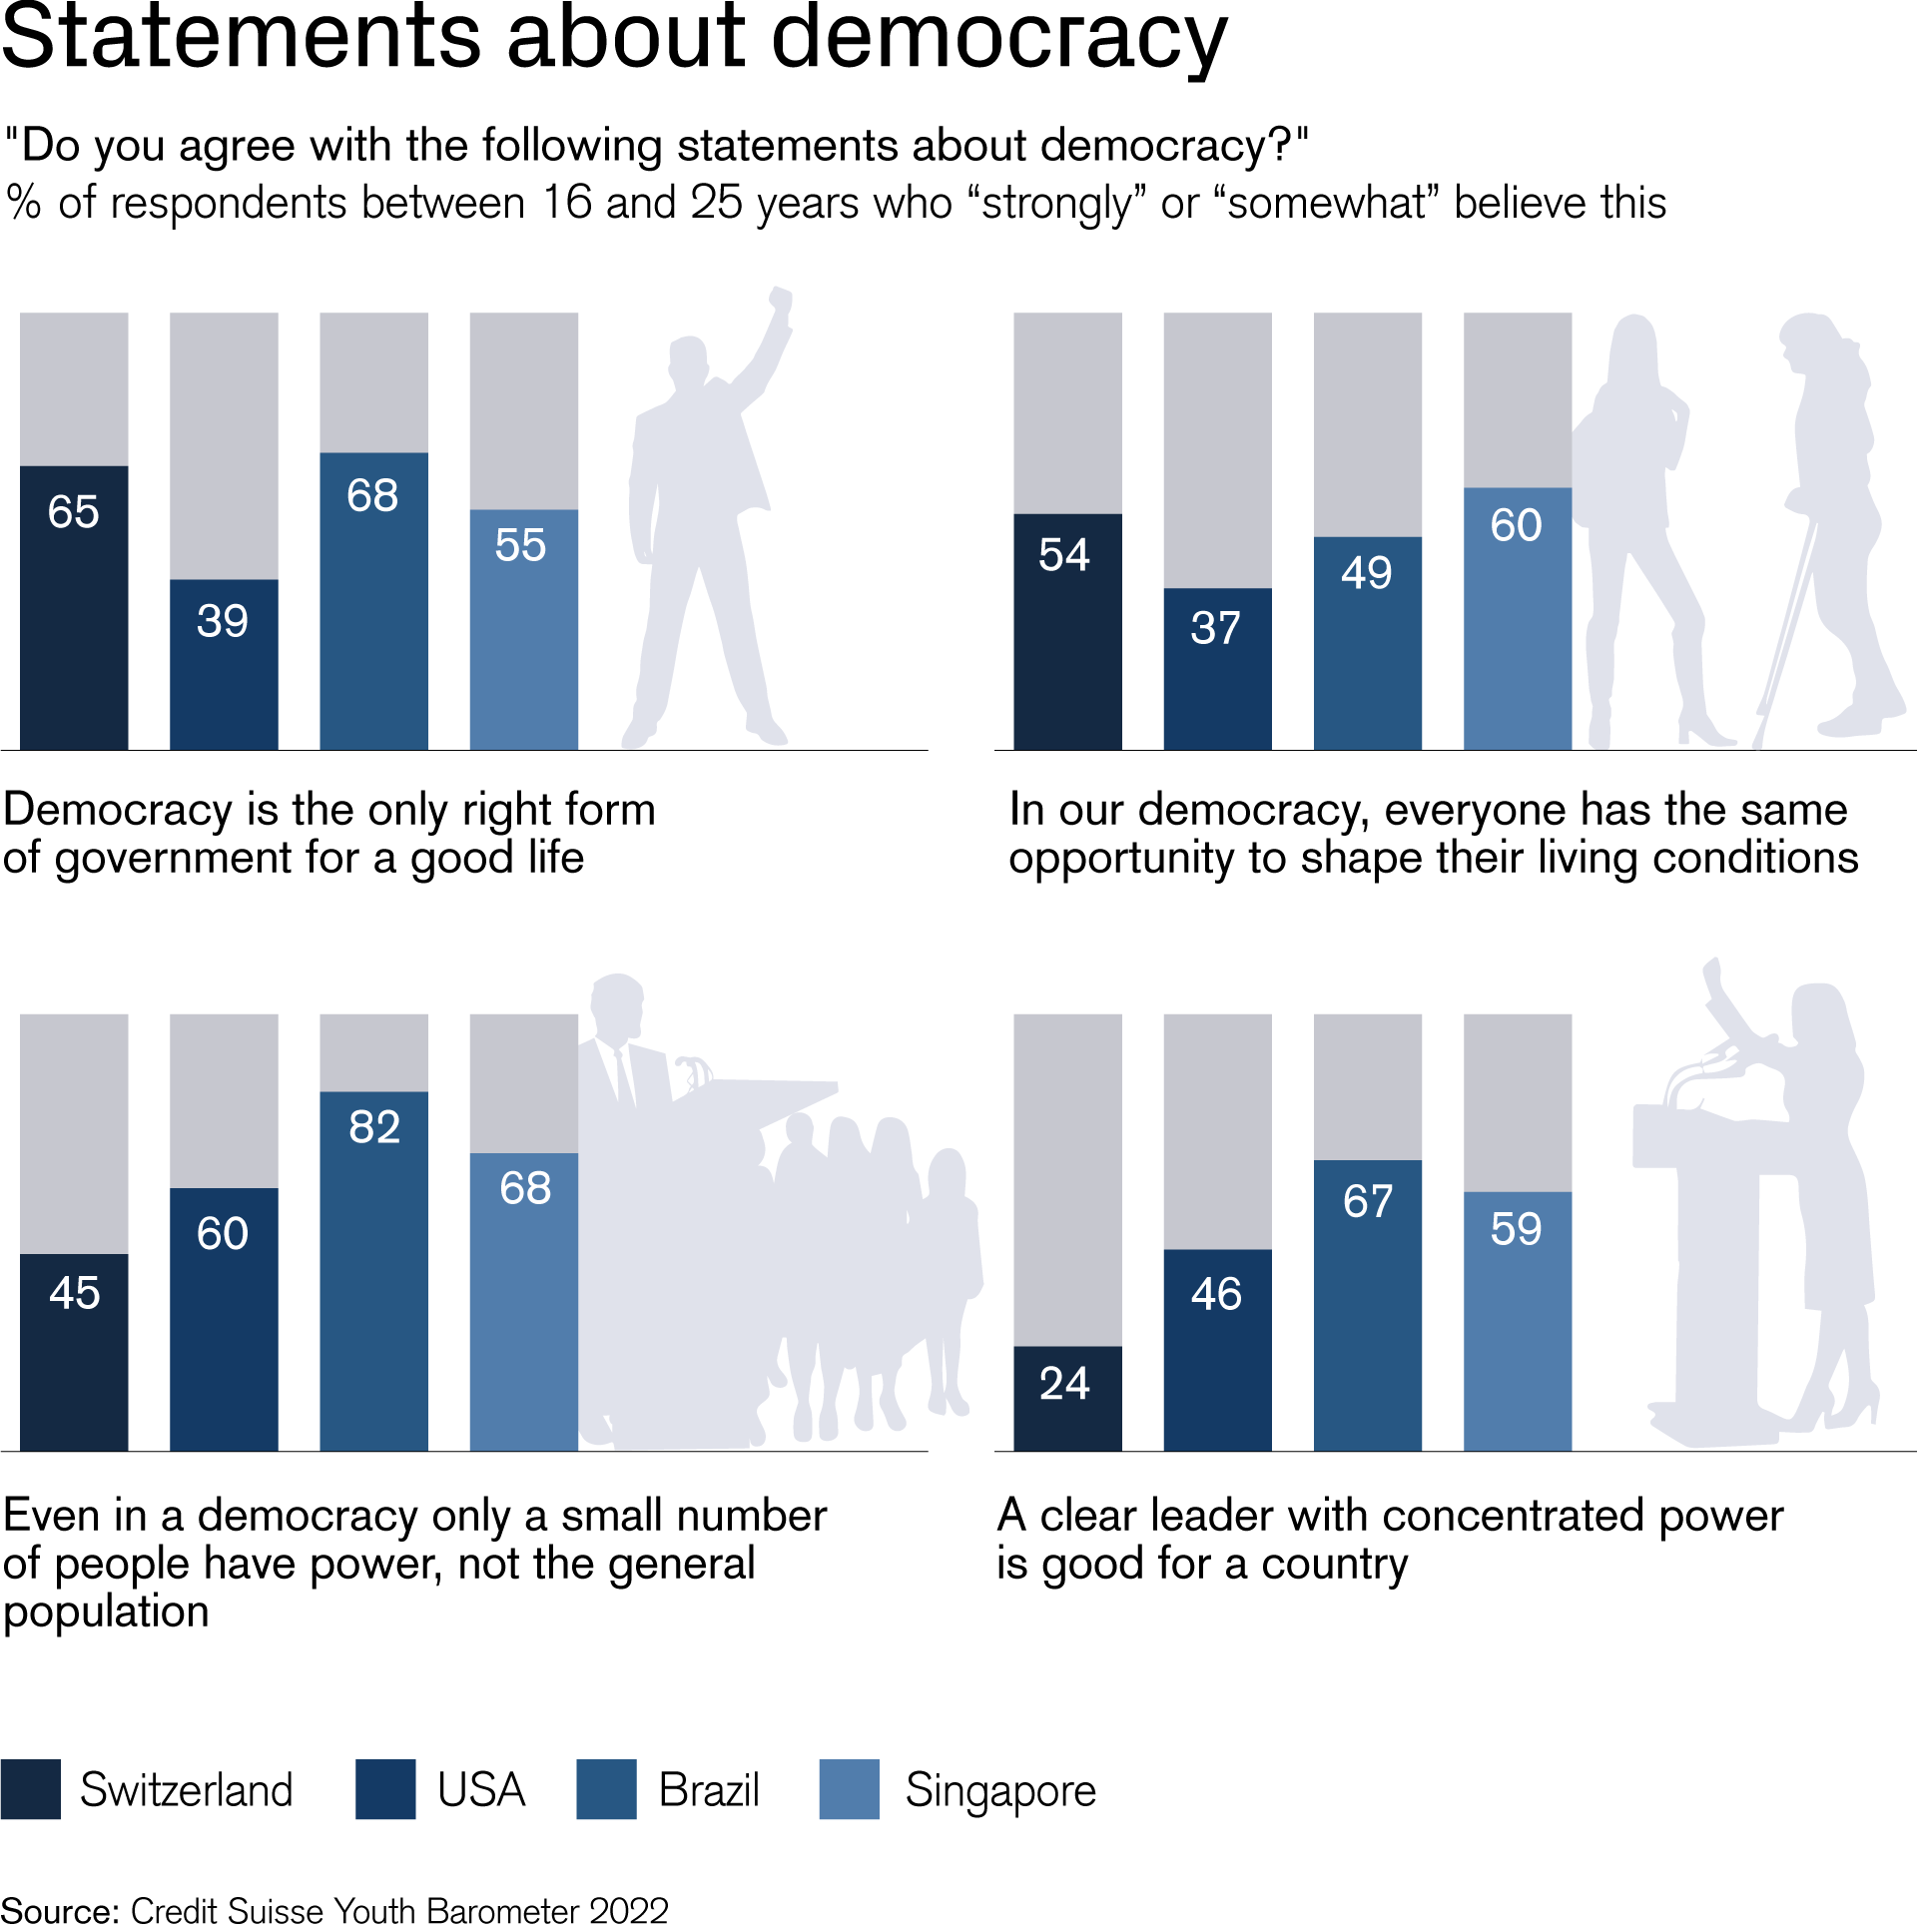 Statements on democracy